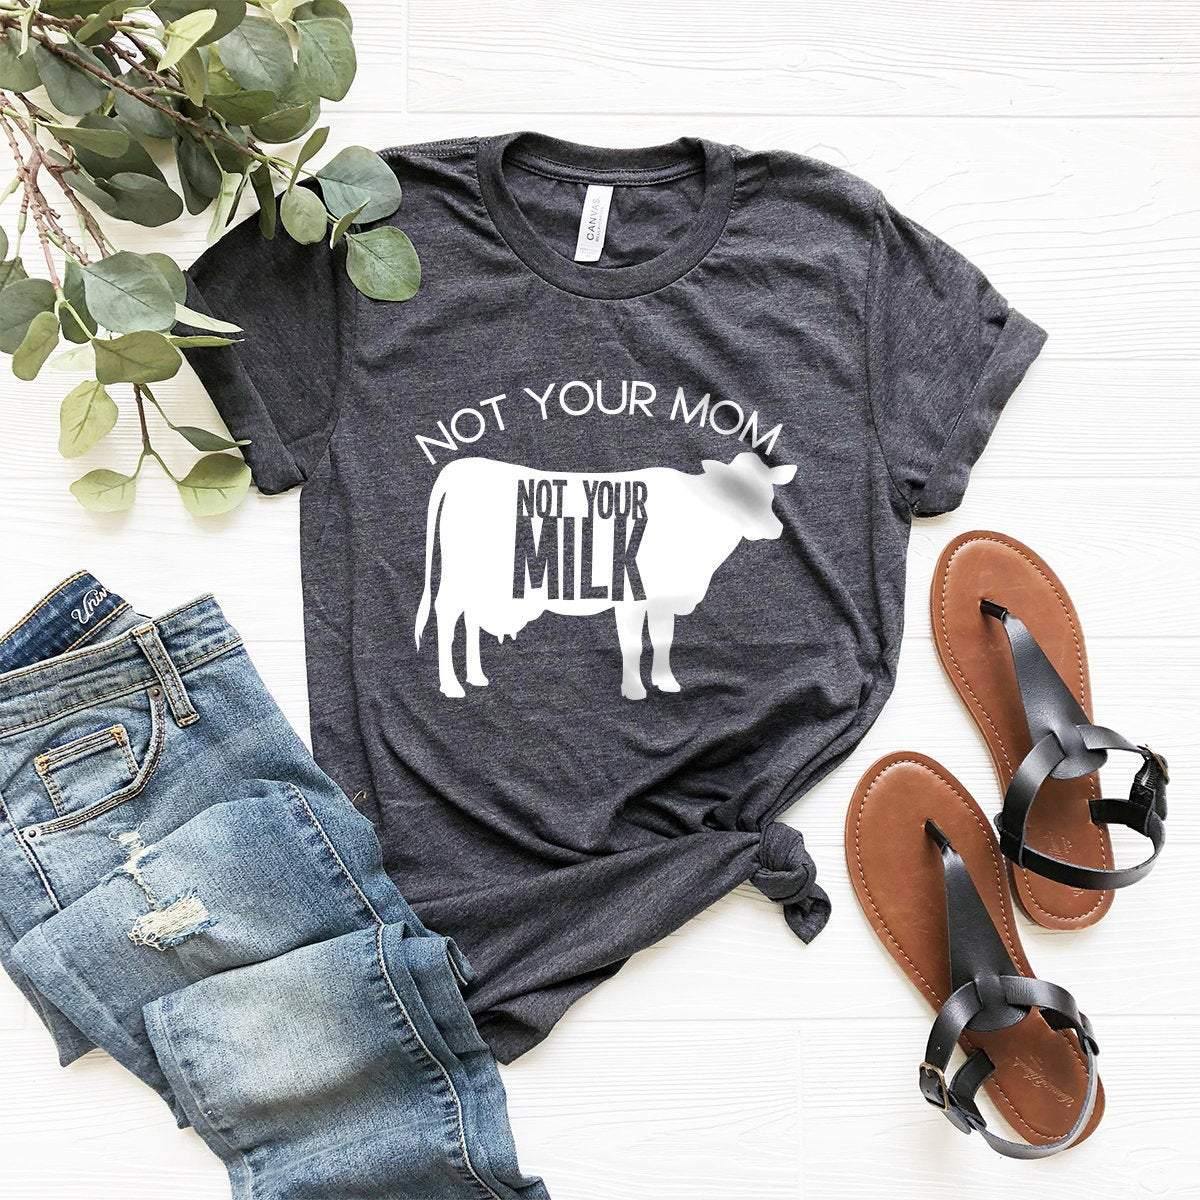 Not Your Mom Not Your Milk Tshirt, Save Animal Shirt, Animal Lover Shirt, Animal Activist Shirt, Animal Liberation T-Shirt, Vegan Shirt - Fastdeliverytees.com